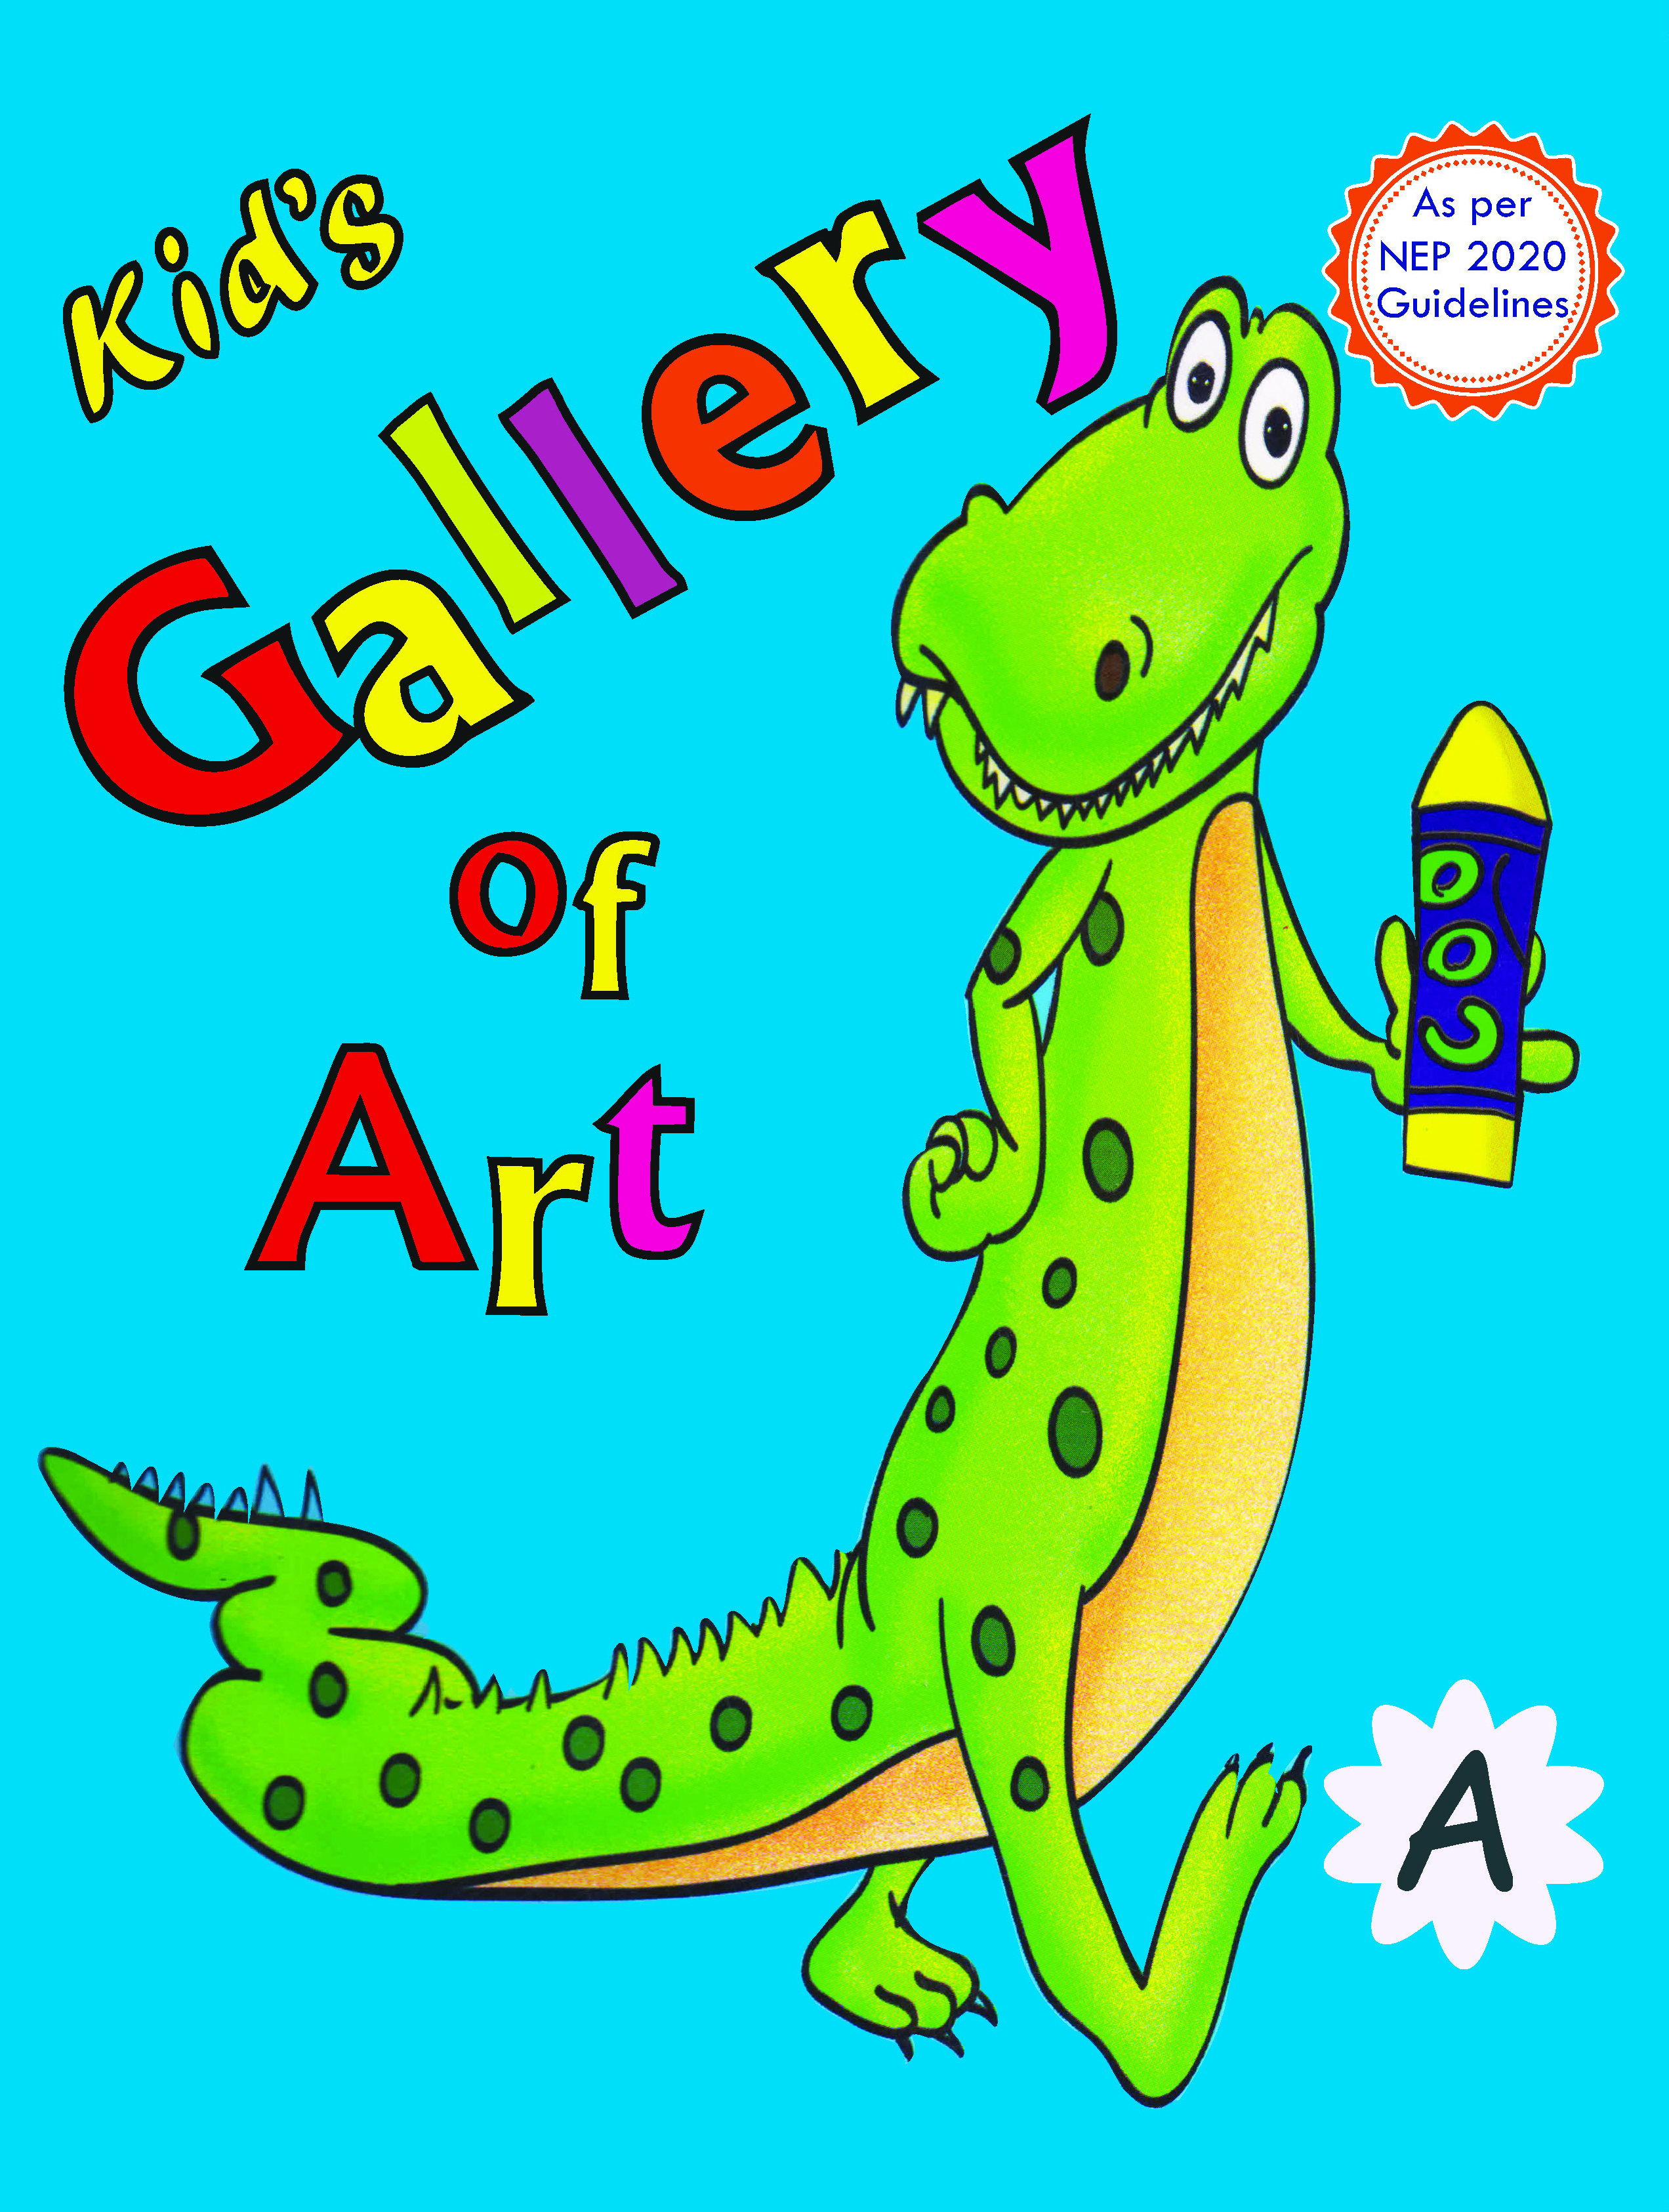 KID'S GALLERY OF ART A